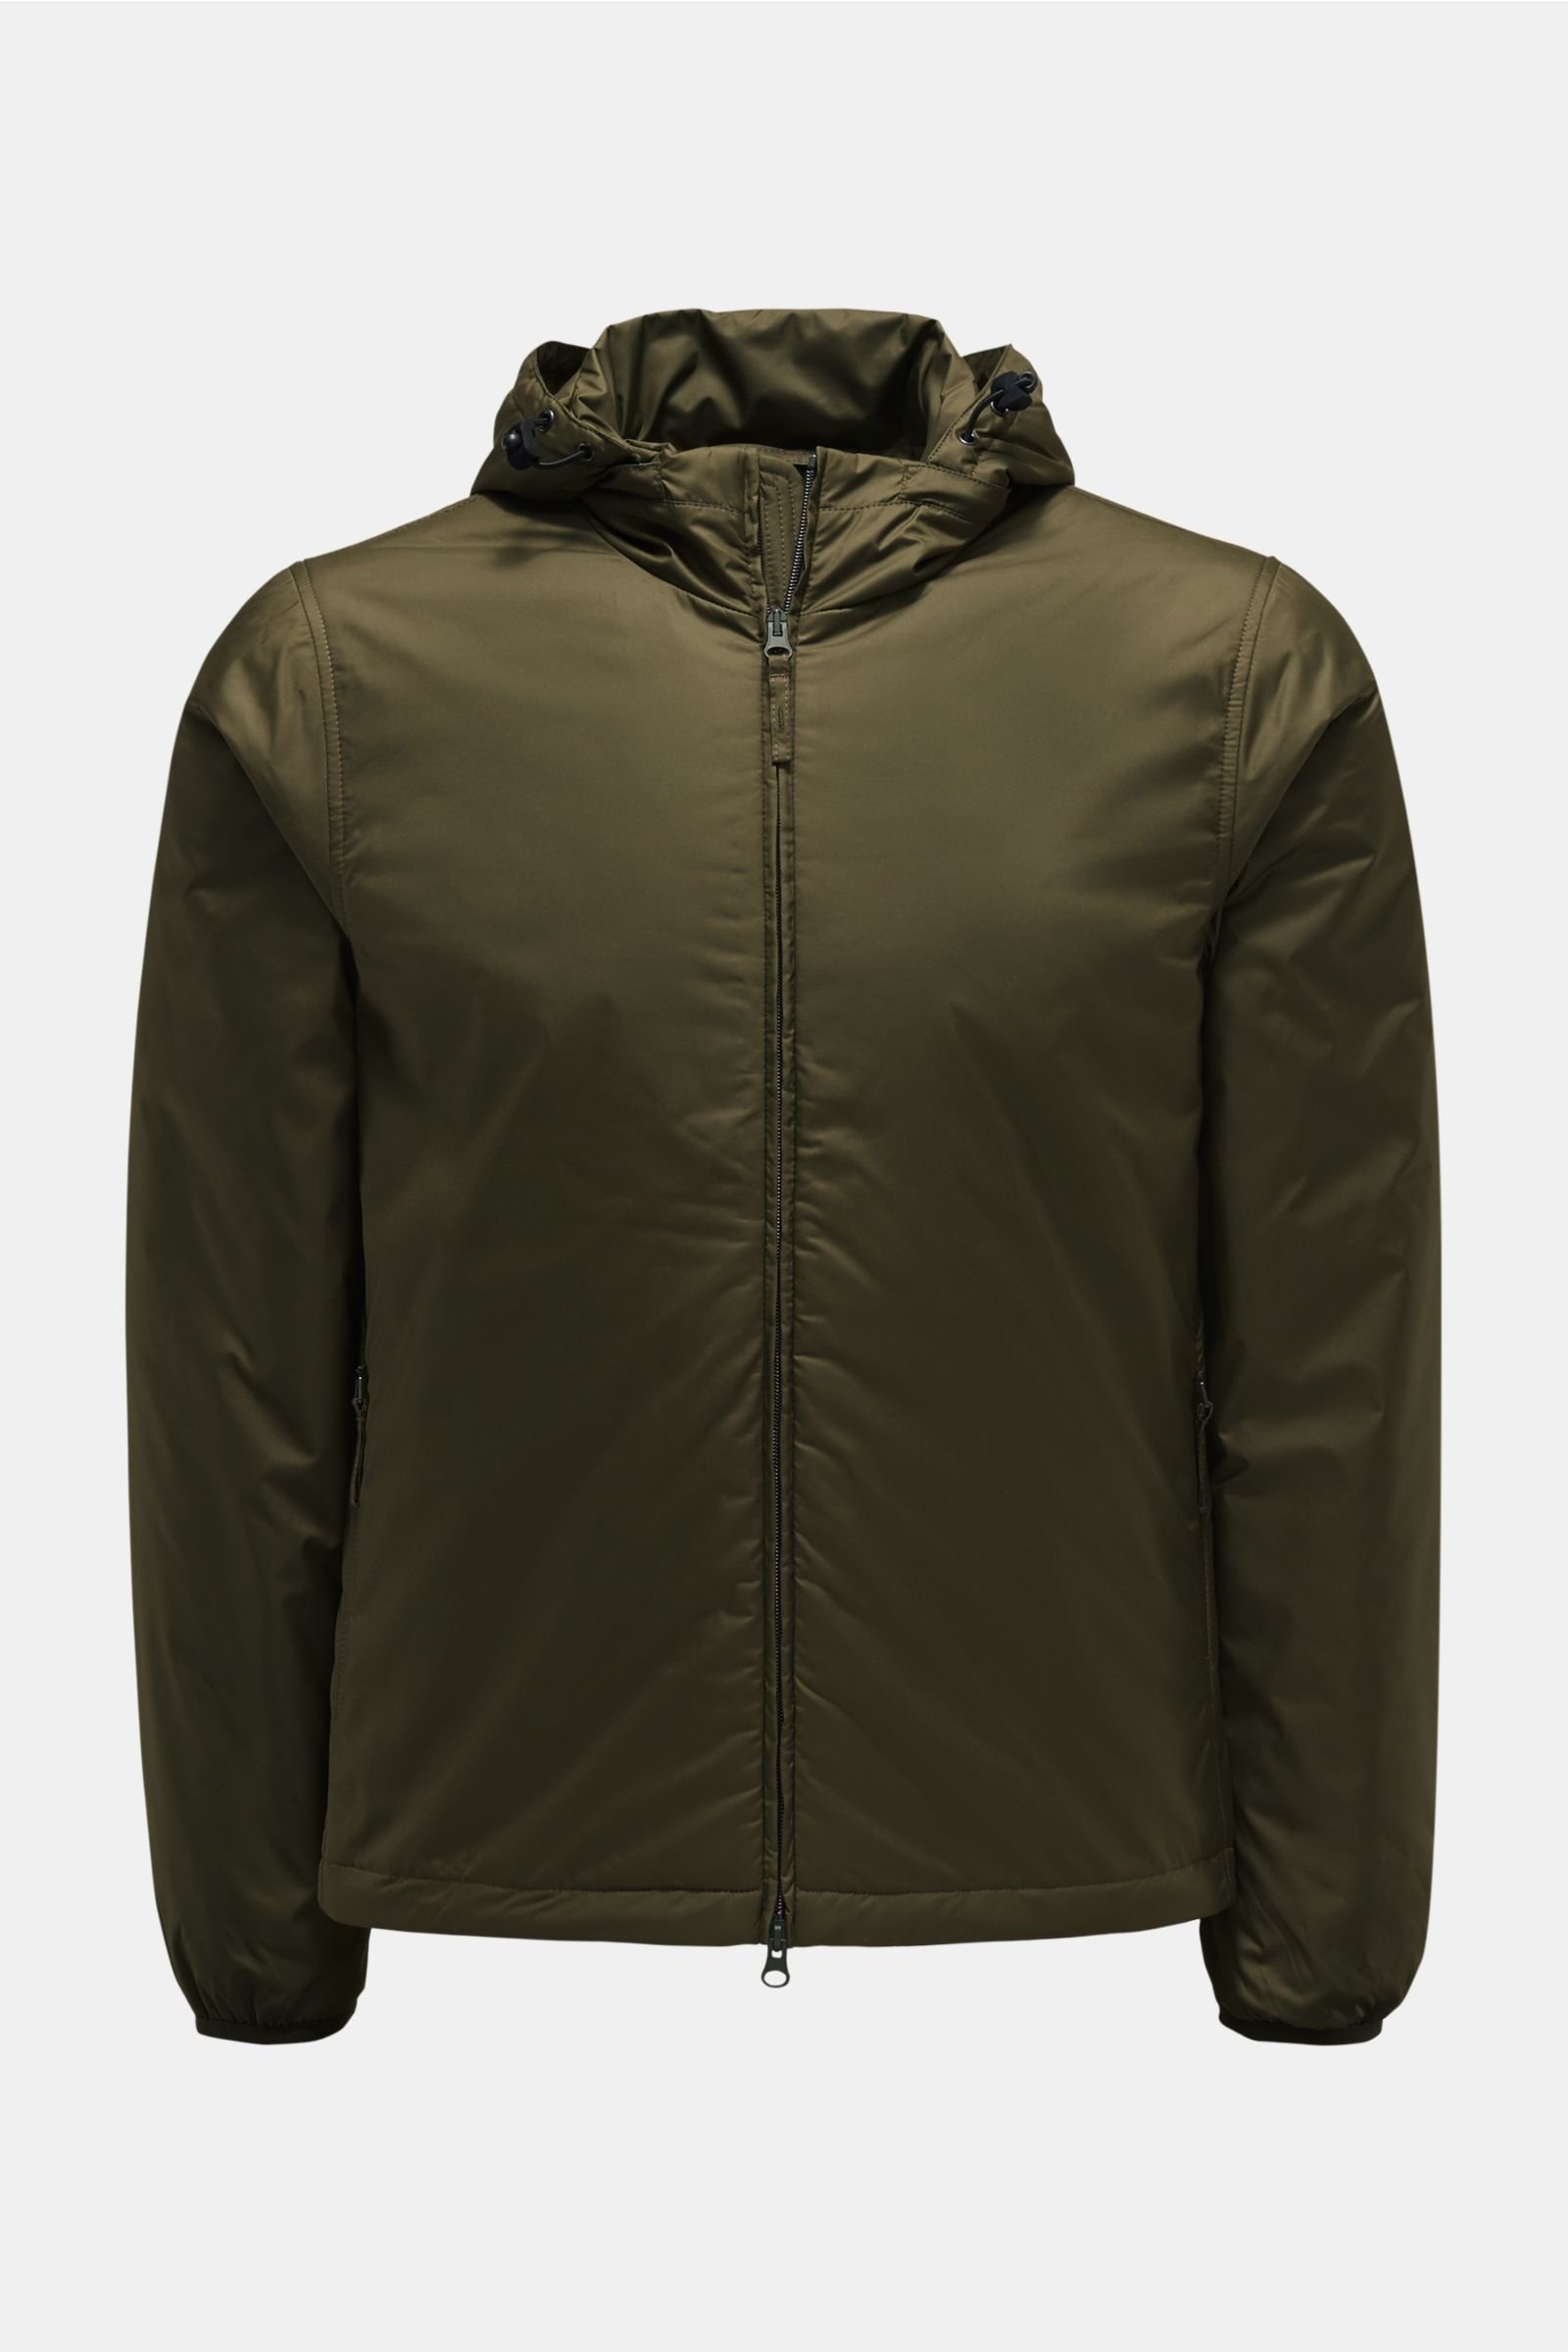 Jacket 'New Albar West' grey-green